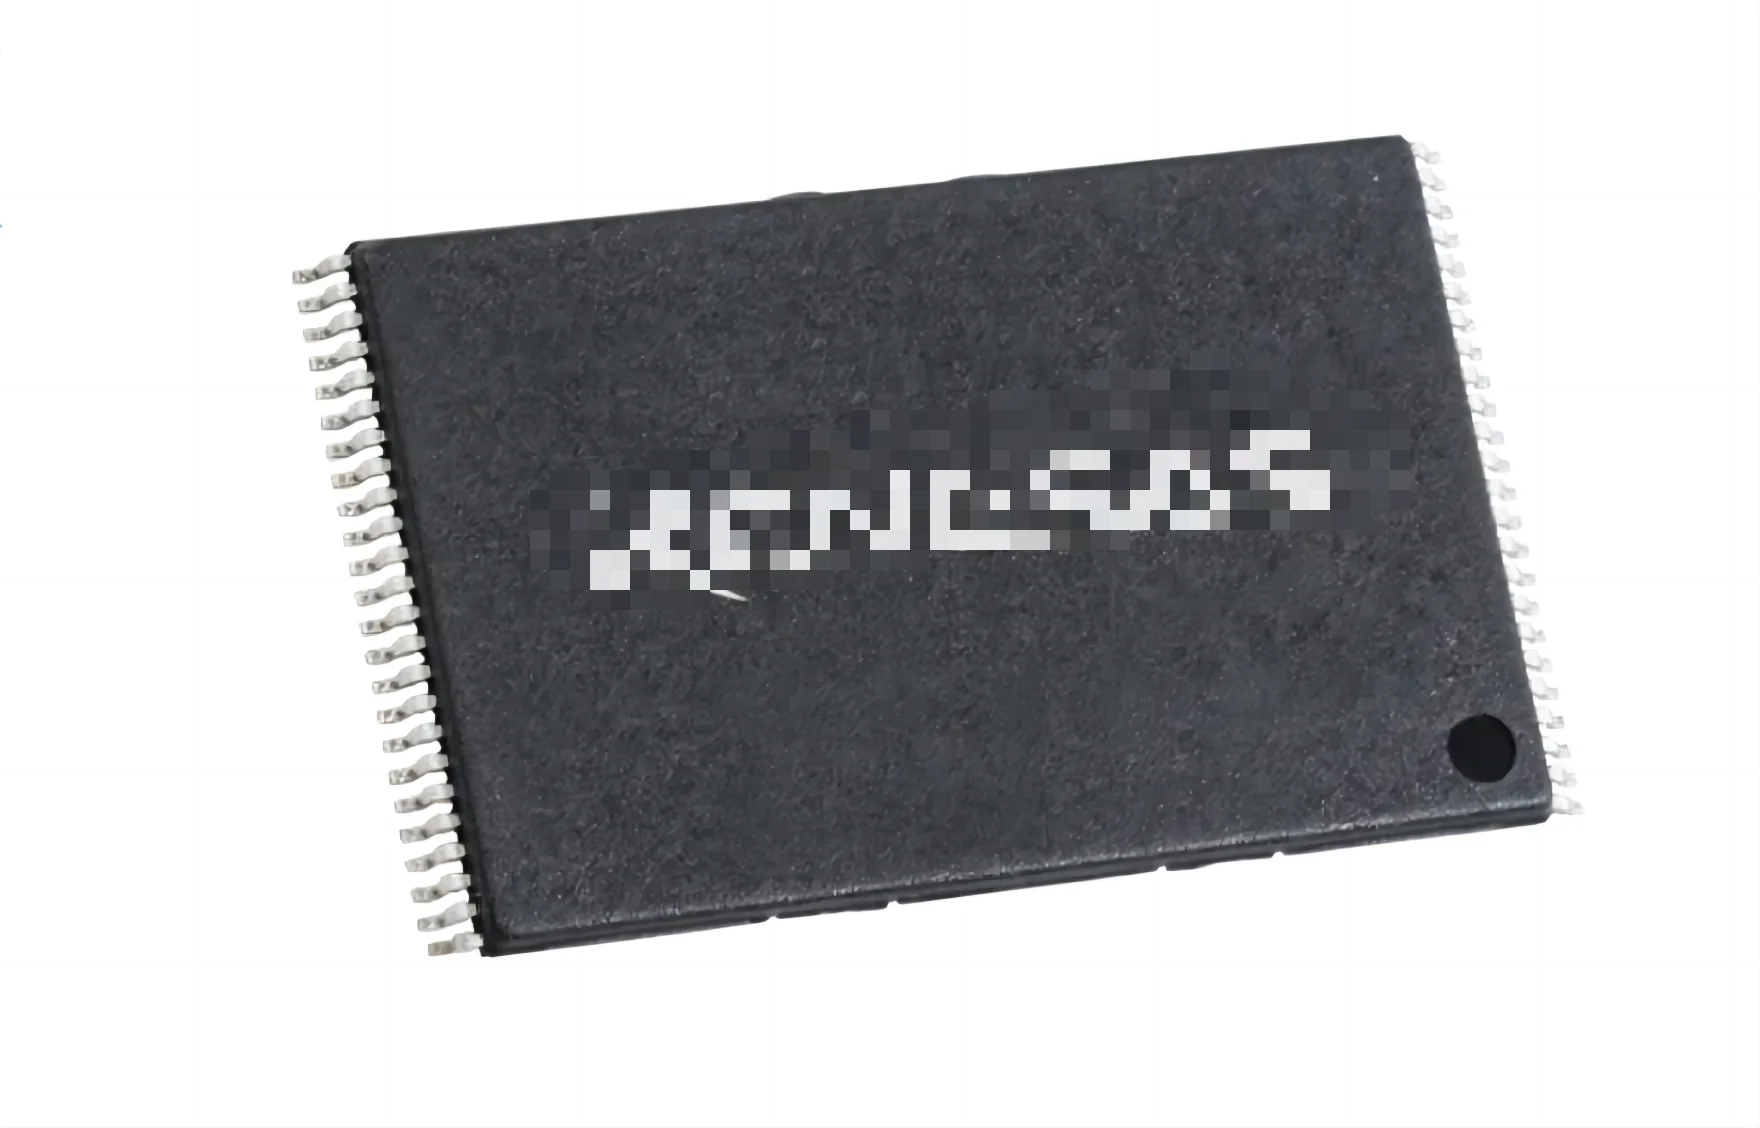 R1LV1616 Продукты для памяти SRAM и хранения данных R1LV1616HSA-4SI